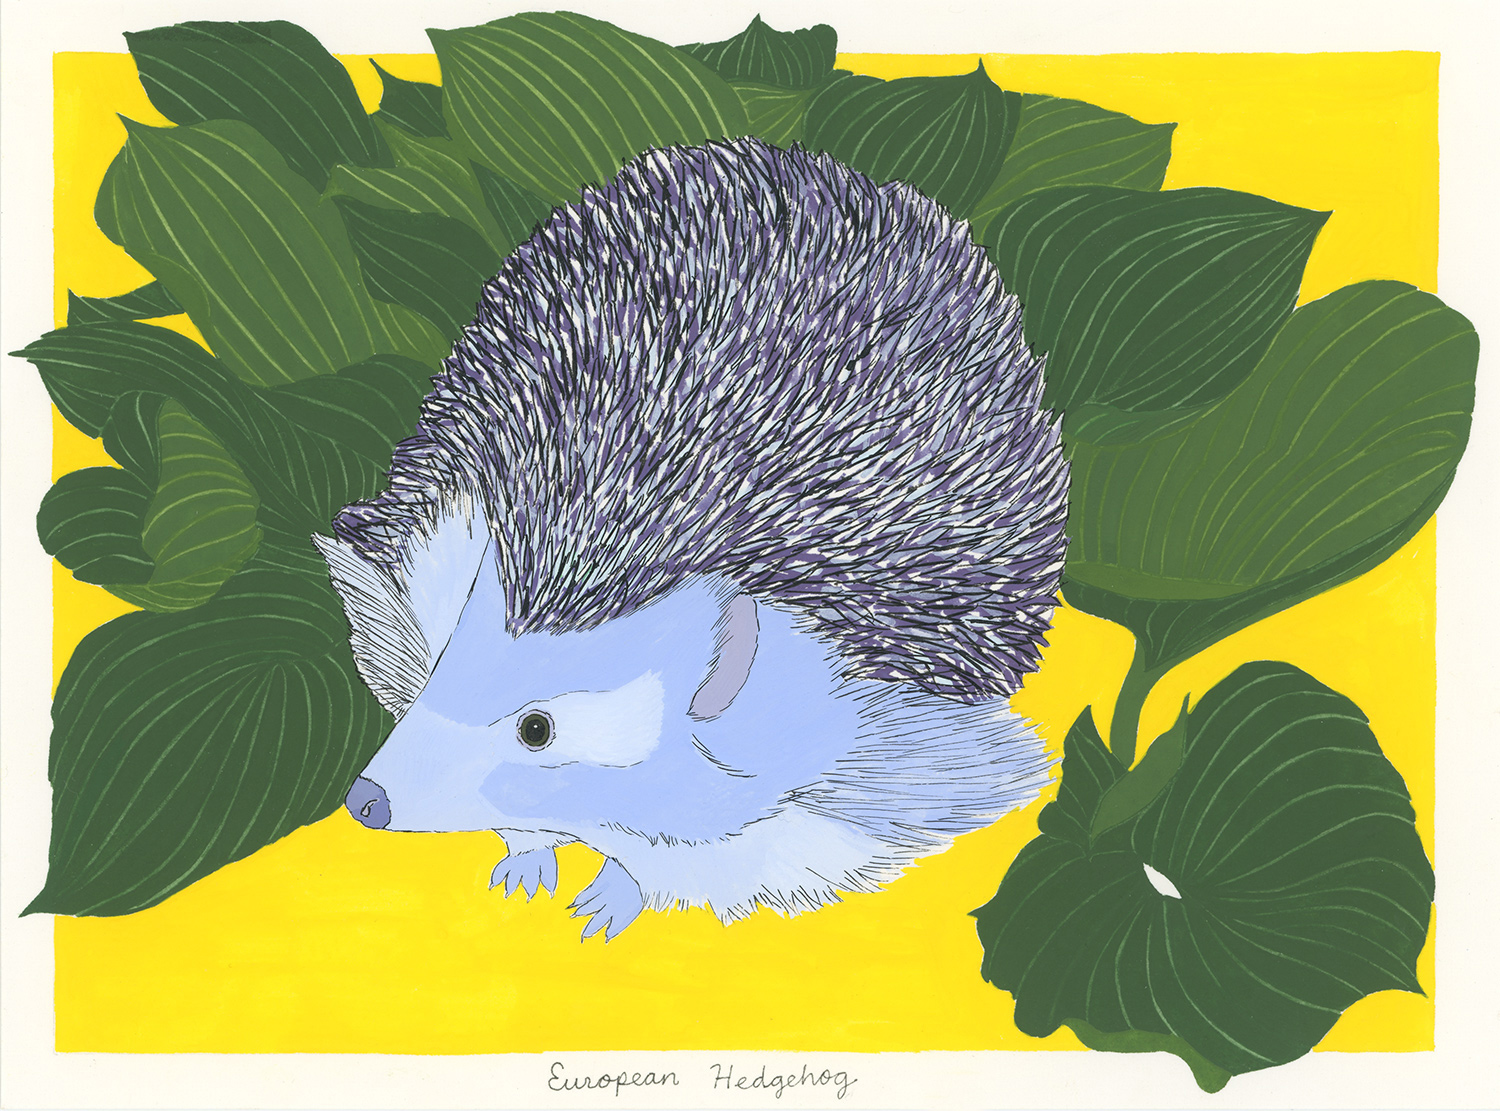 European Hedgehog (for the one that got stuck in a garden gate)